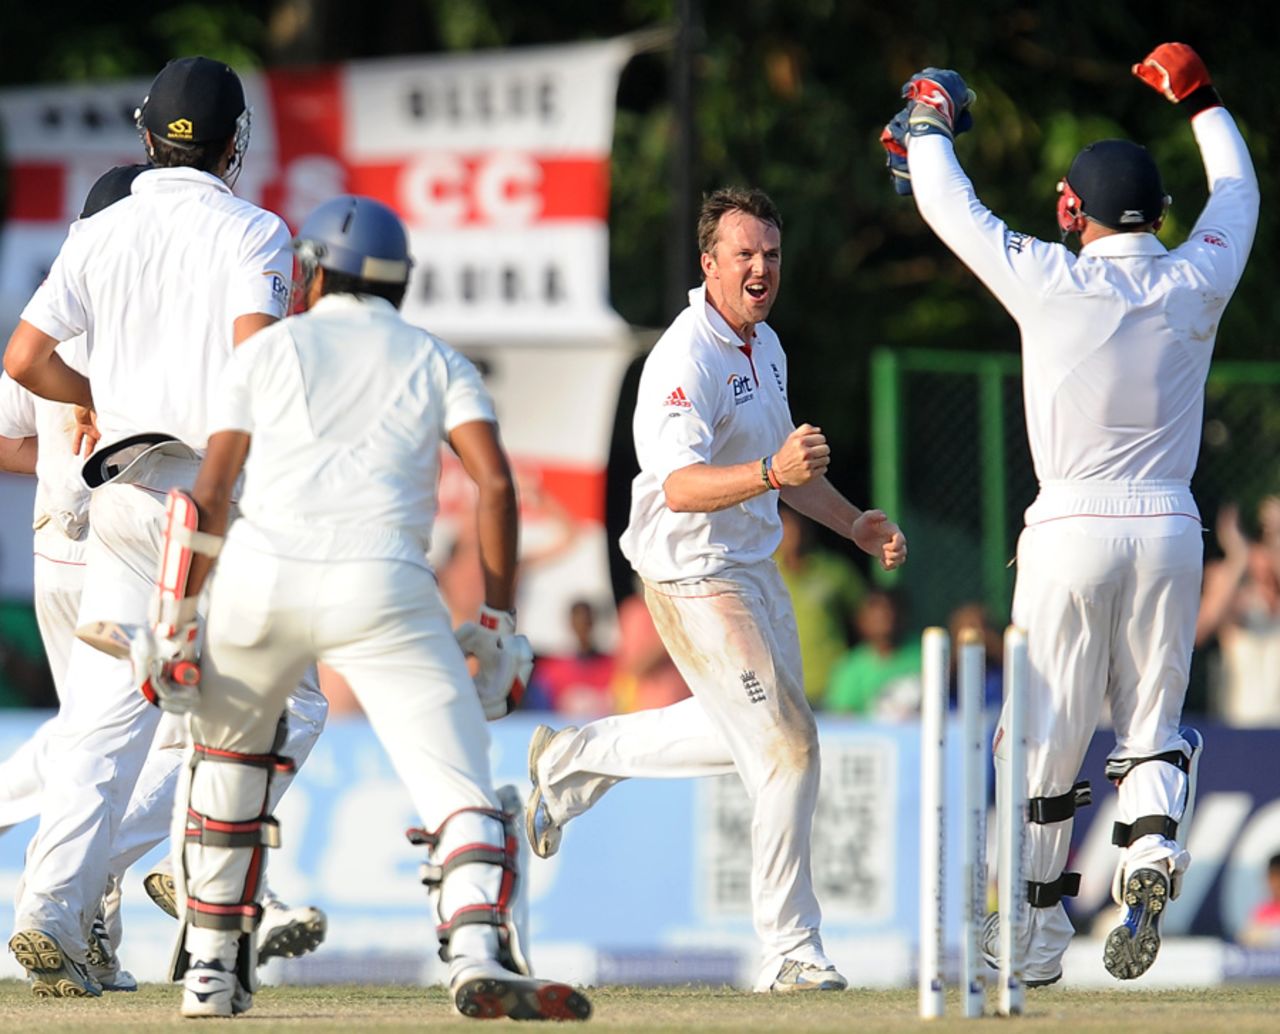 Graeme Swann bowled Suraj Randiv for a duck, Sri Lanka v England, 2nd Test, Colombo, P Sara Oval, 4th day, April 6, 2012